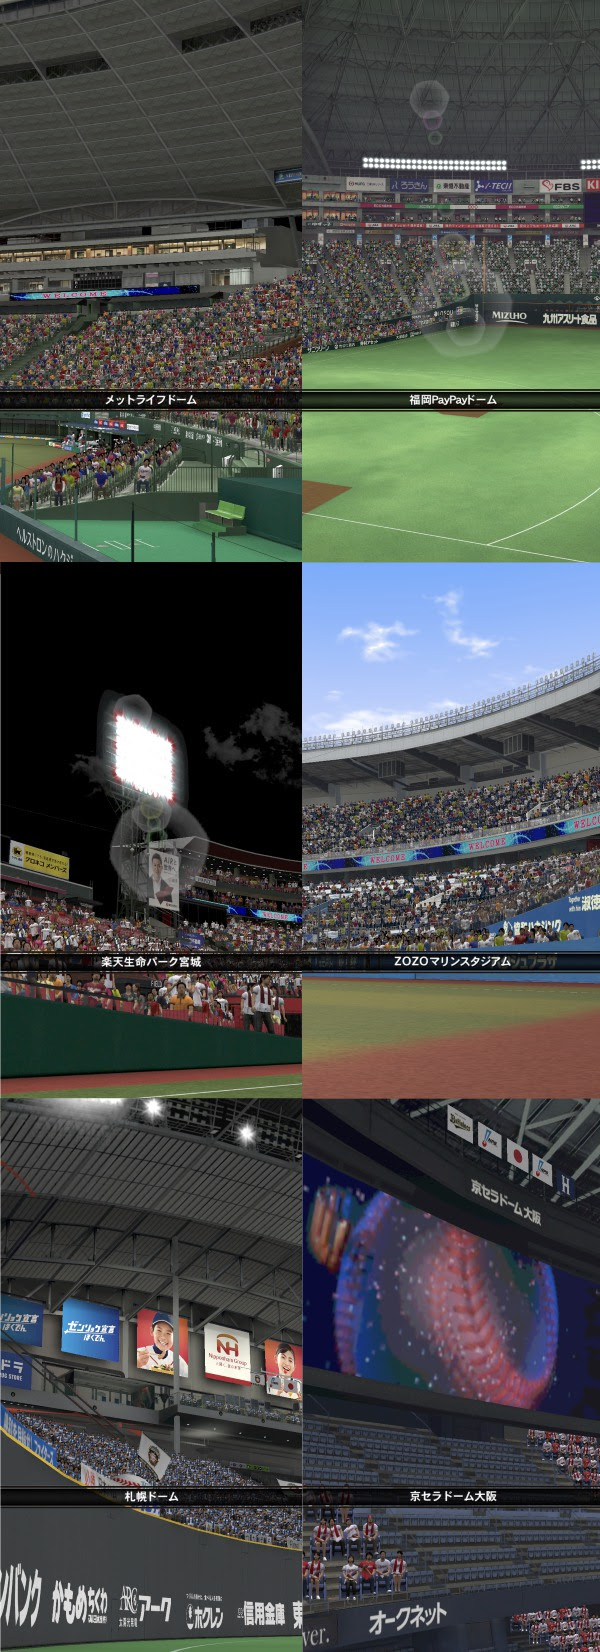 Konami プロスピa でver 11 0 0を公開 Paypayドームを含む6球場の追加 特殊ユニフォームの登場など盛りだくさんの内容に Social Game Info